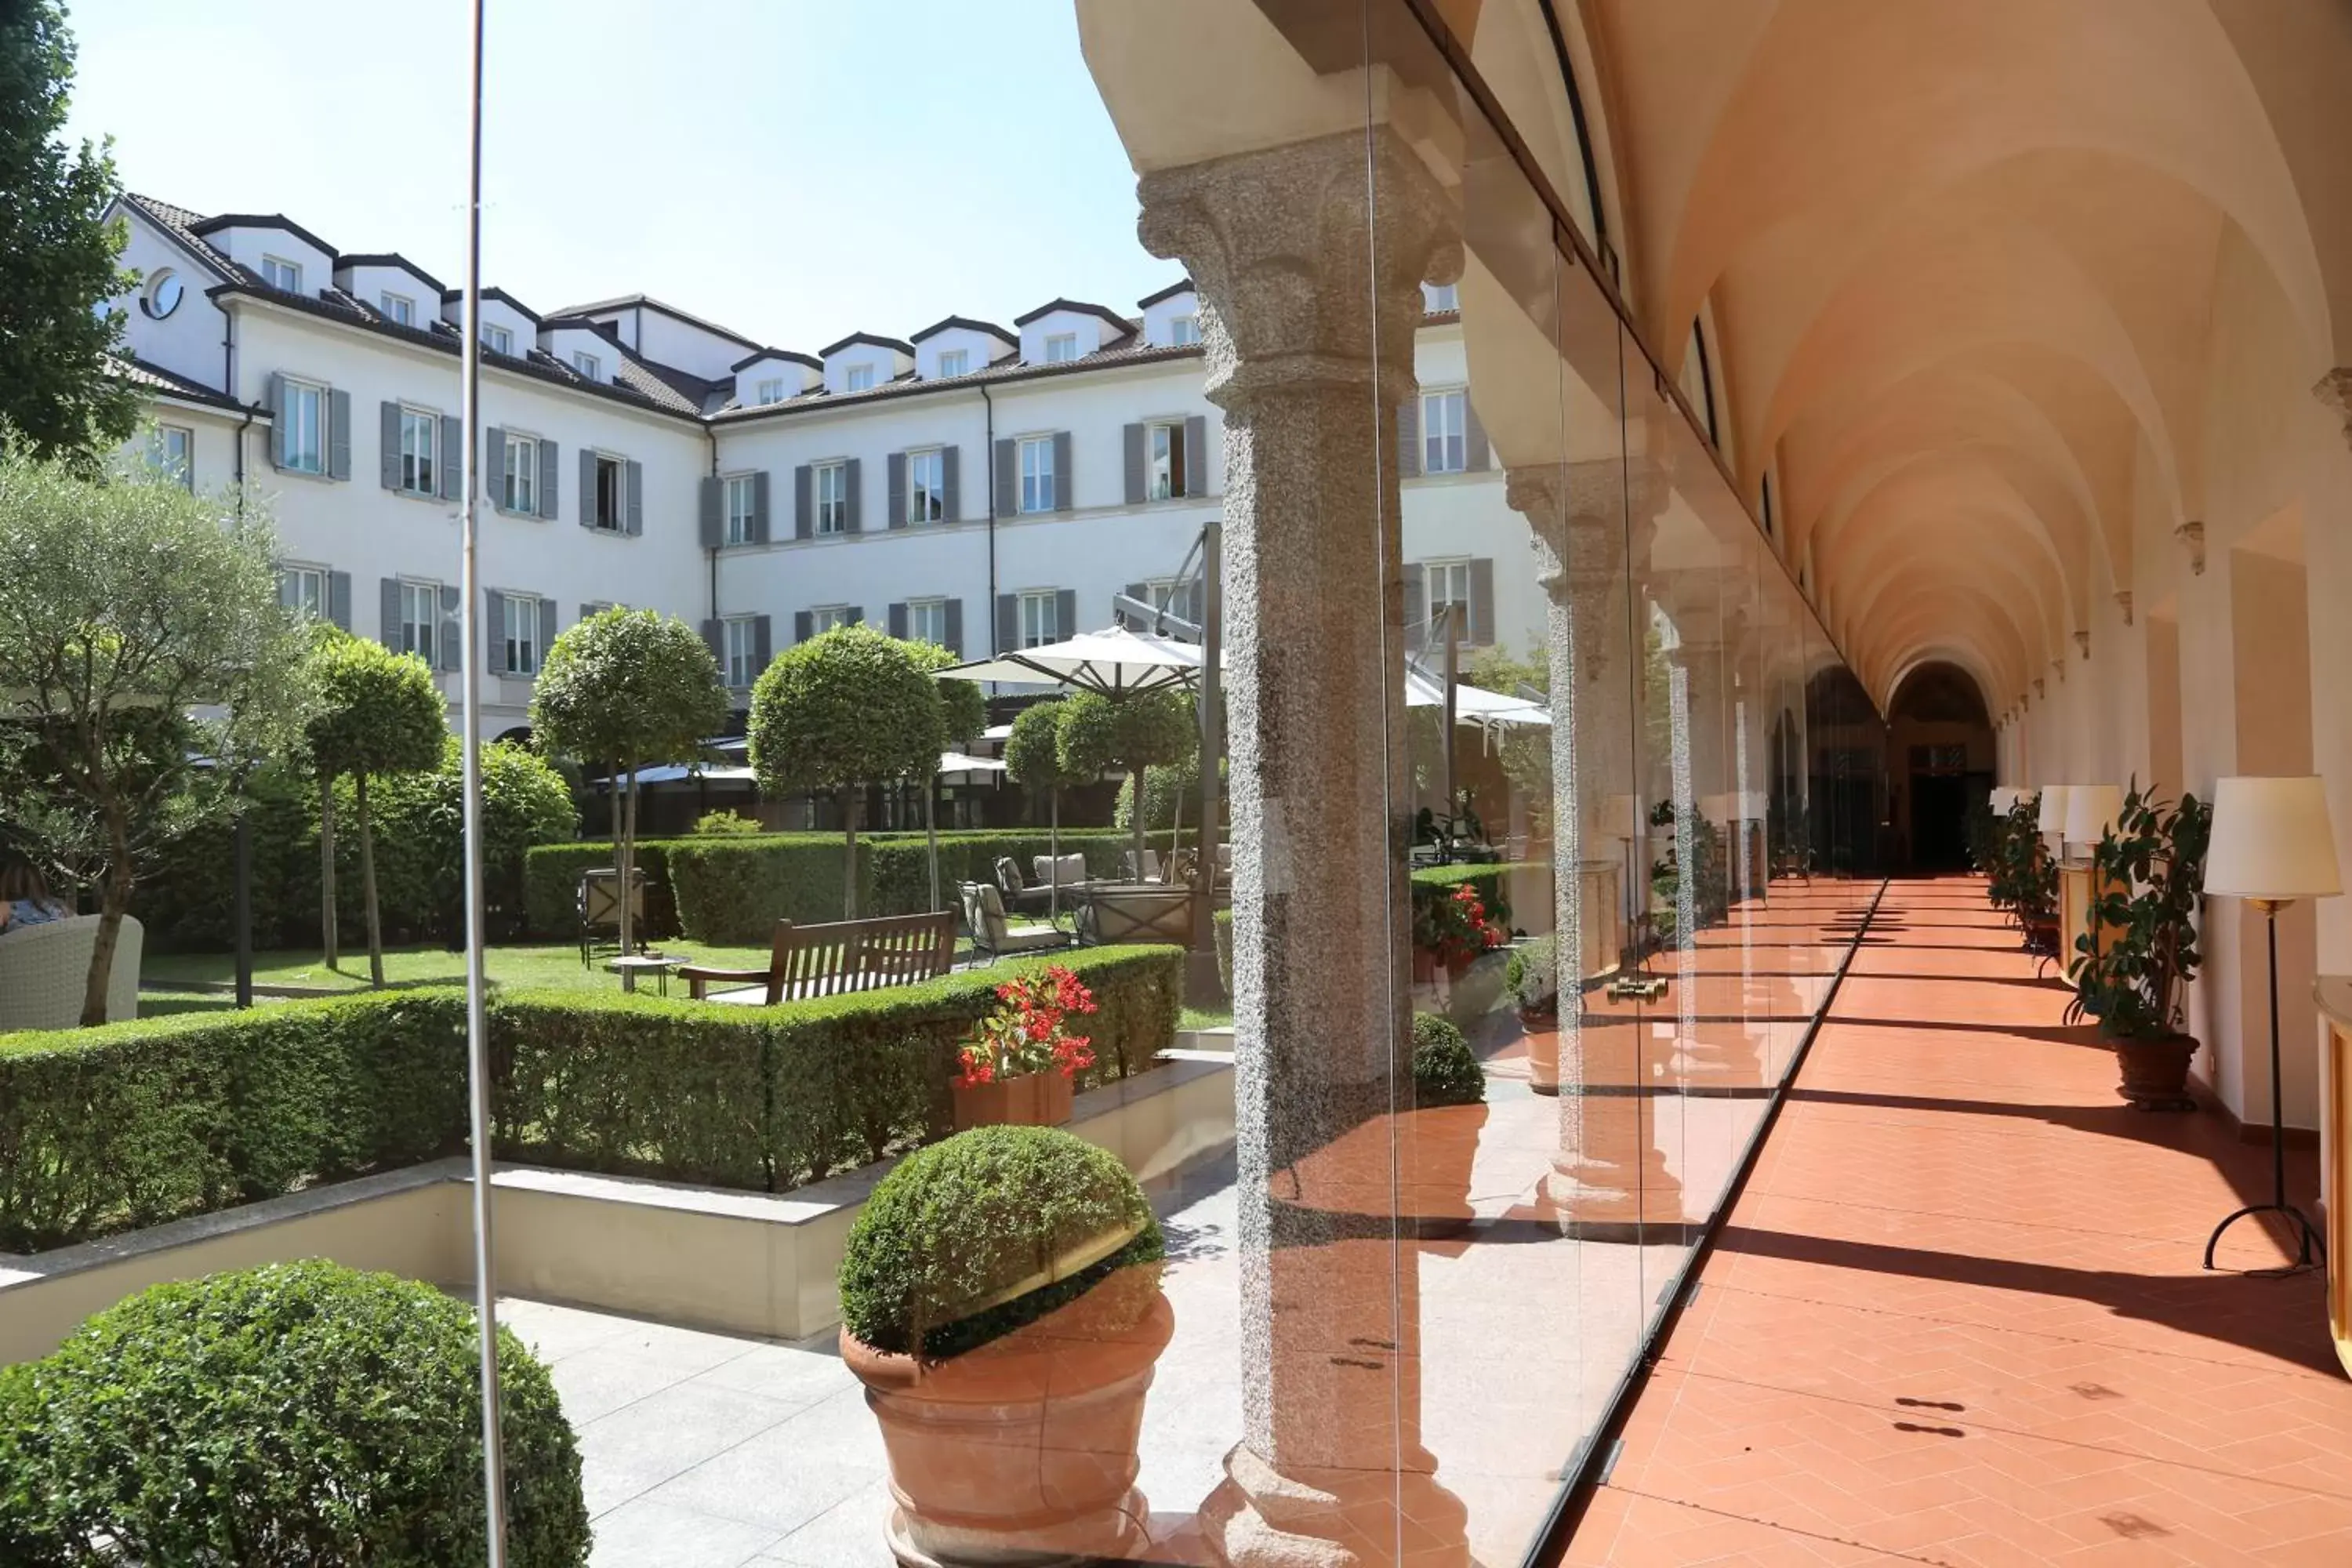 Garden in Four Seasons Hotel Milano